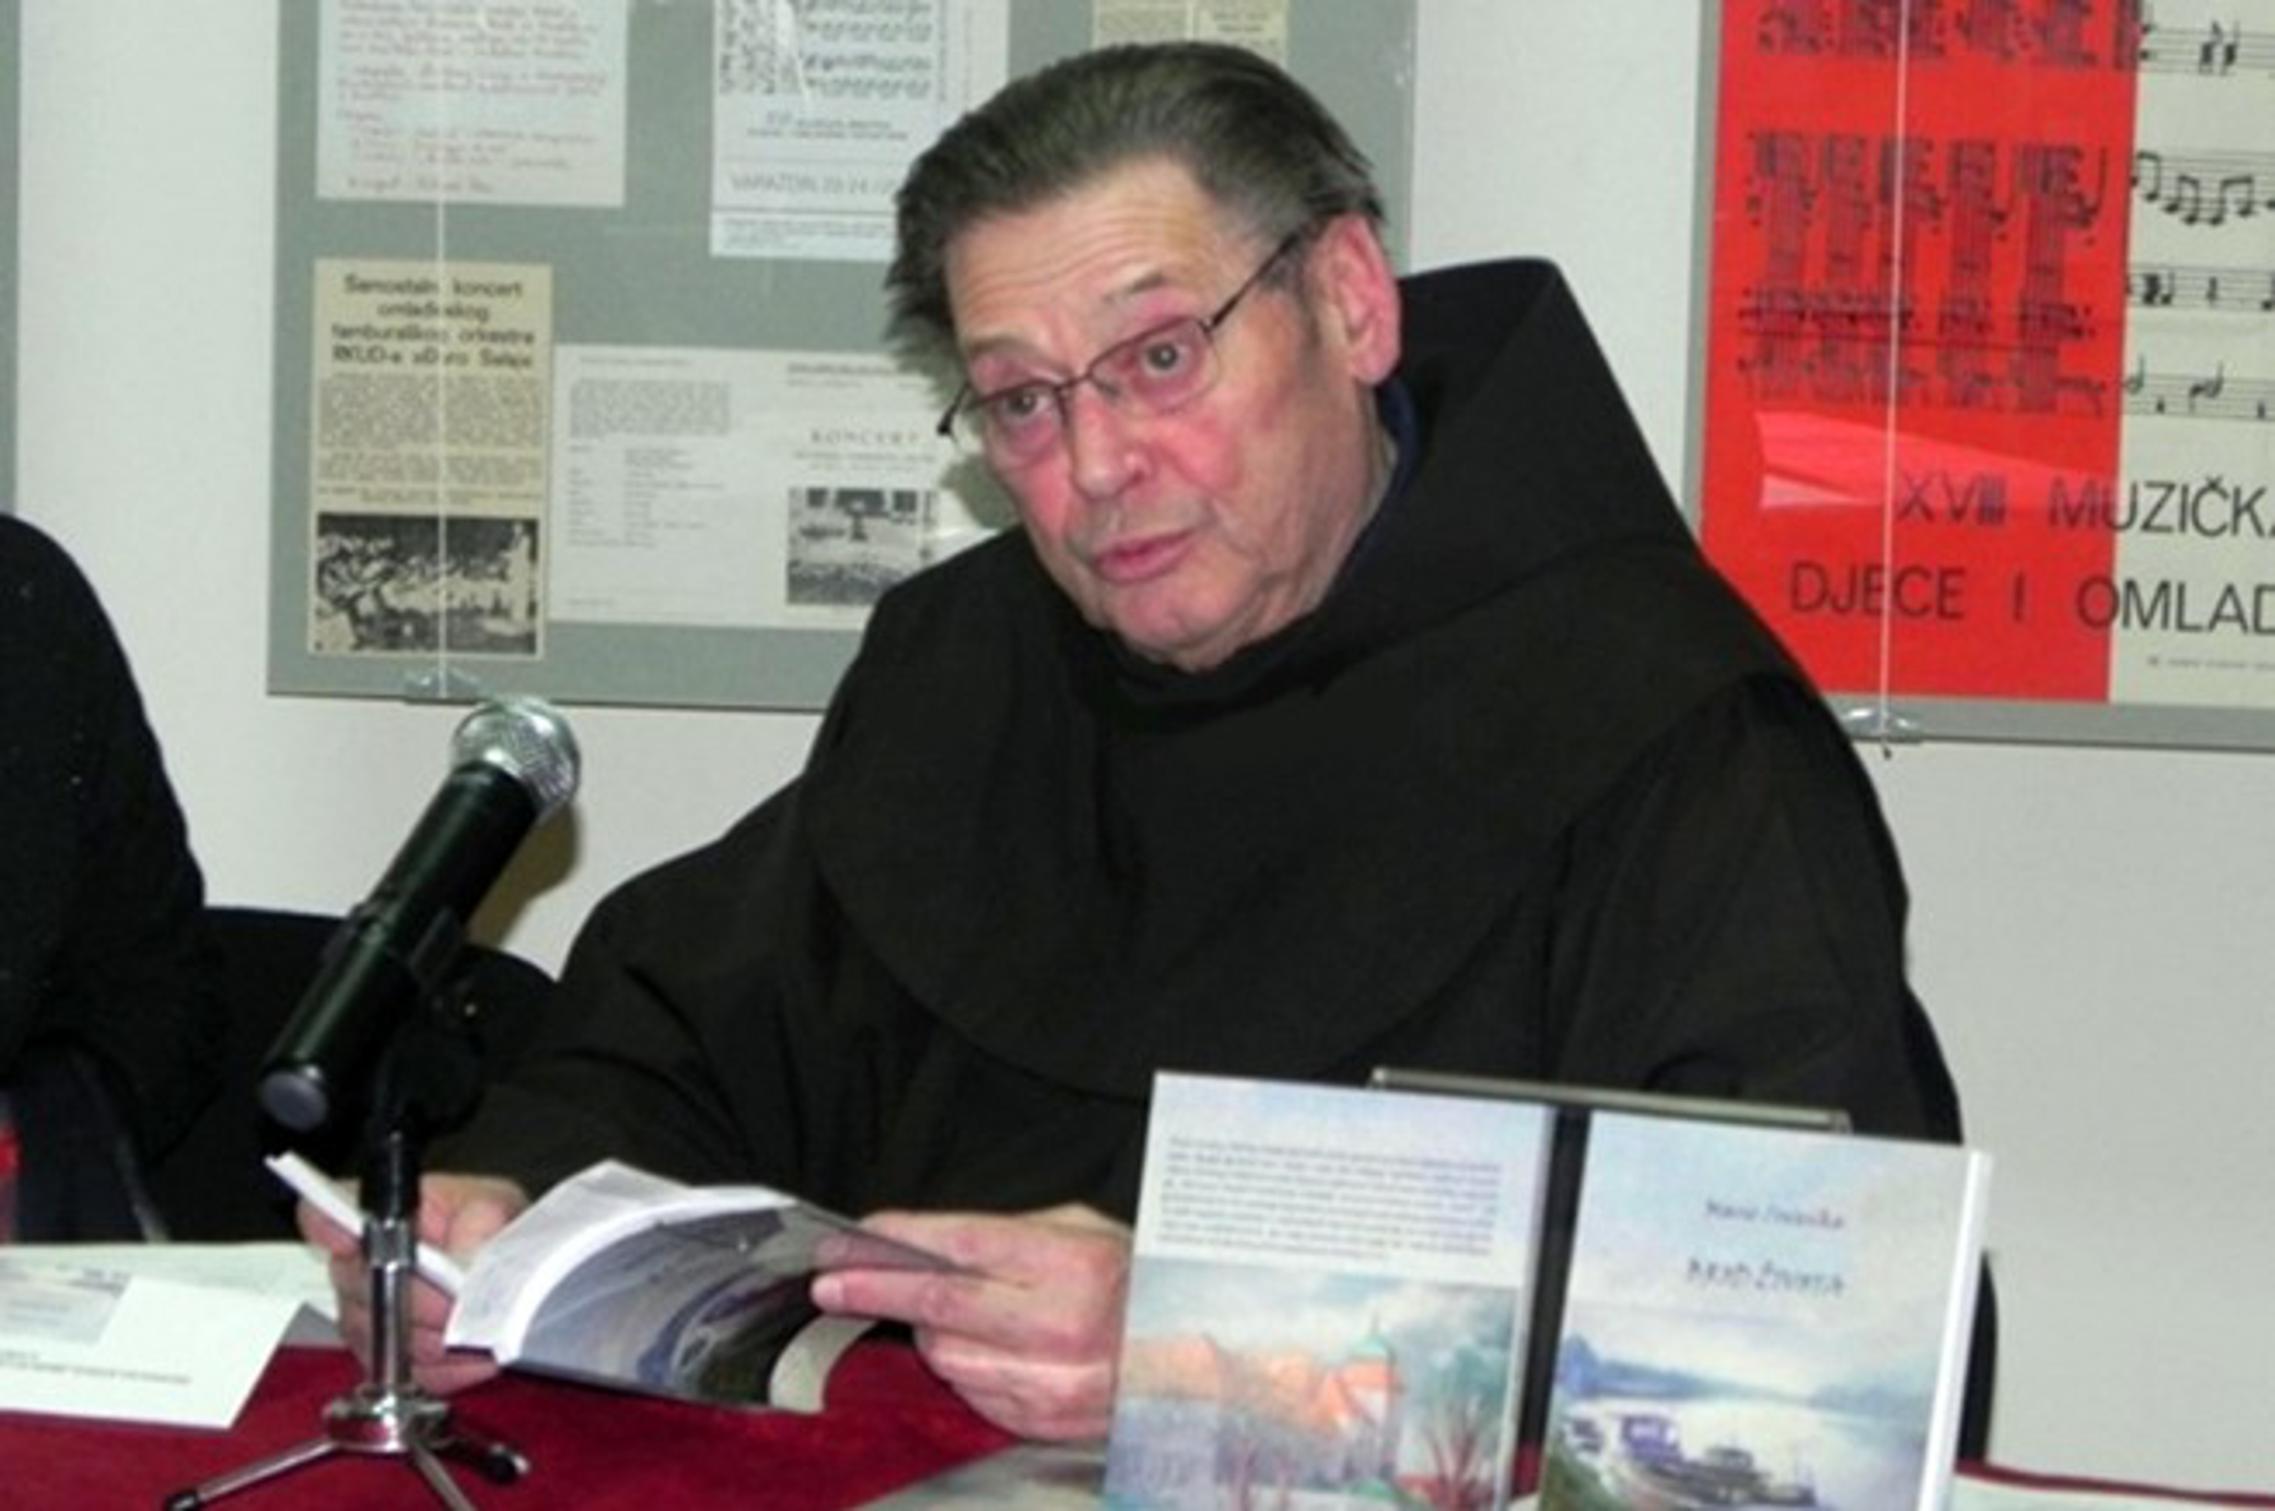 Pater Mario Crvenka